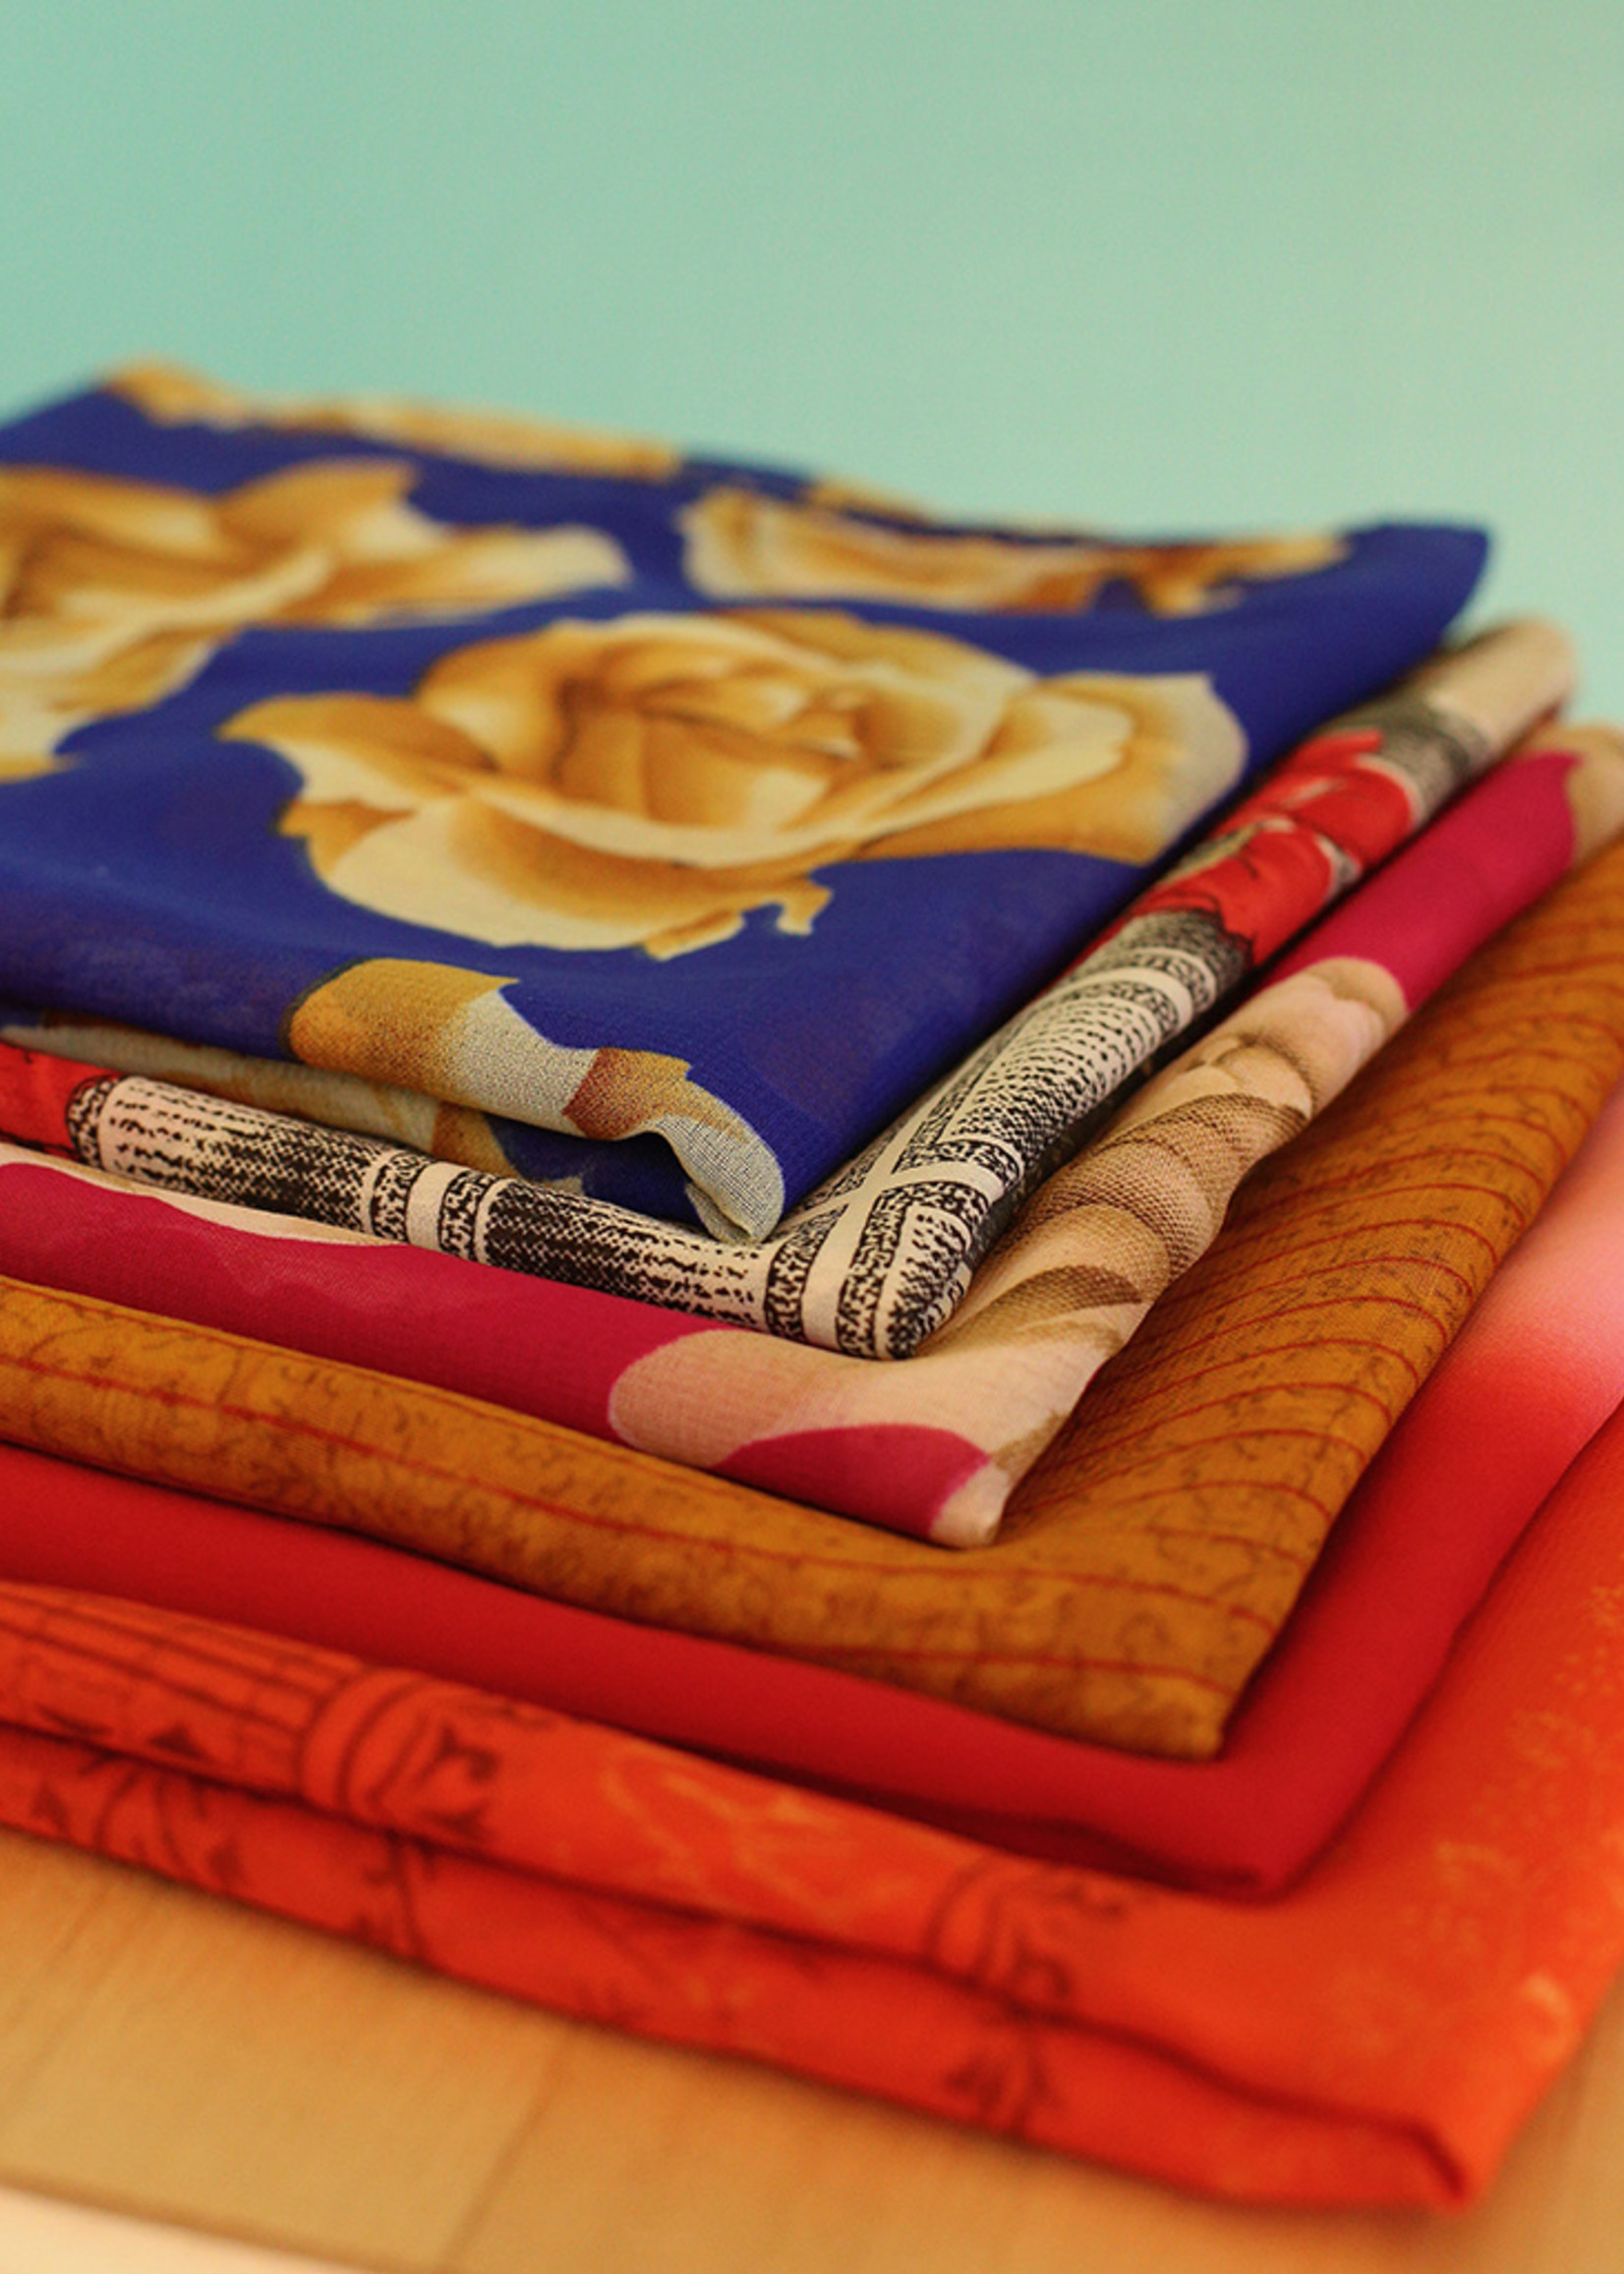 Sari Fabric Furoshiki Gift Wraps - Set of 6 from HumanKind Fair